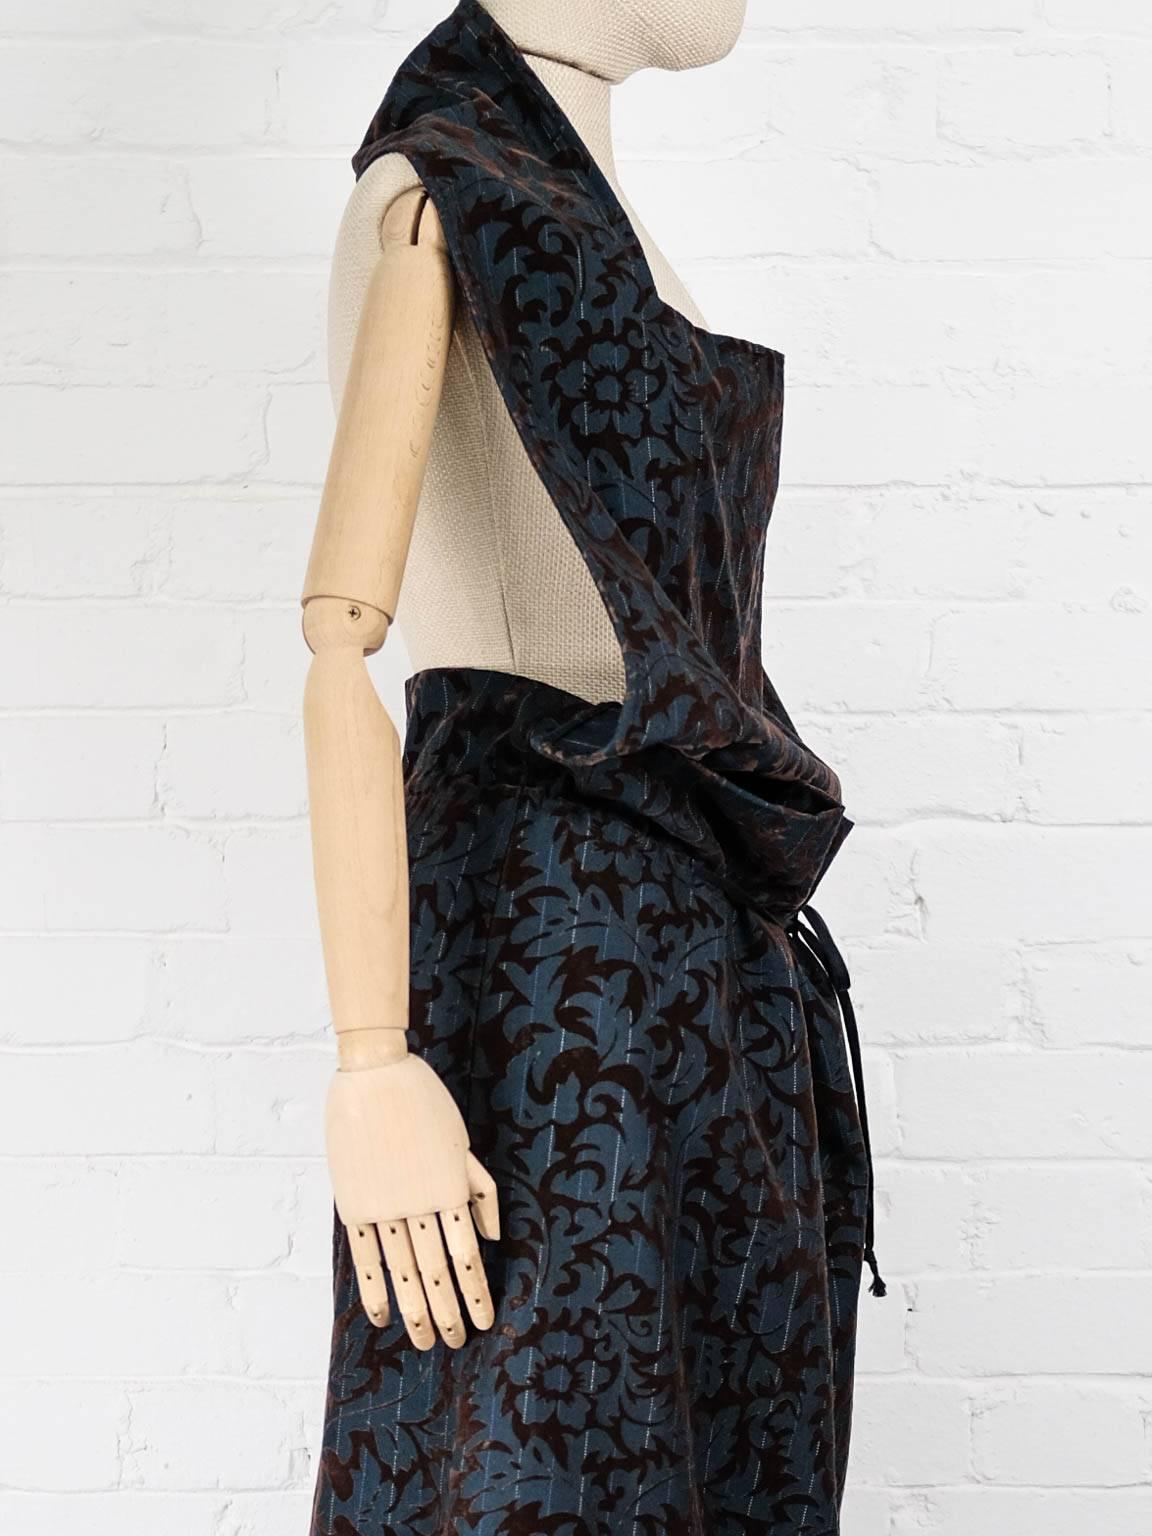 1996 COMME des GARÇONS Rei Kawakubo flocked velvet dress In Excellent Condition For Sale In London, GB